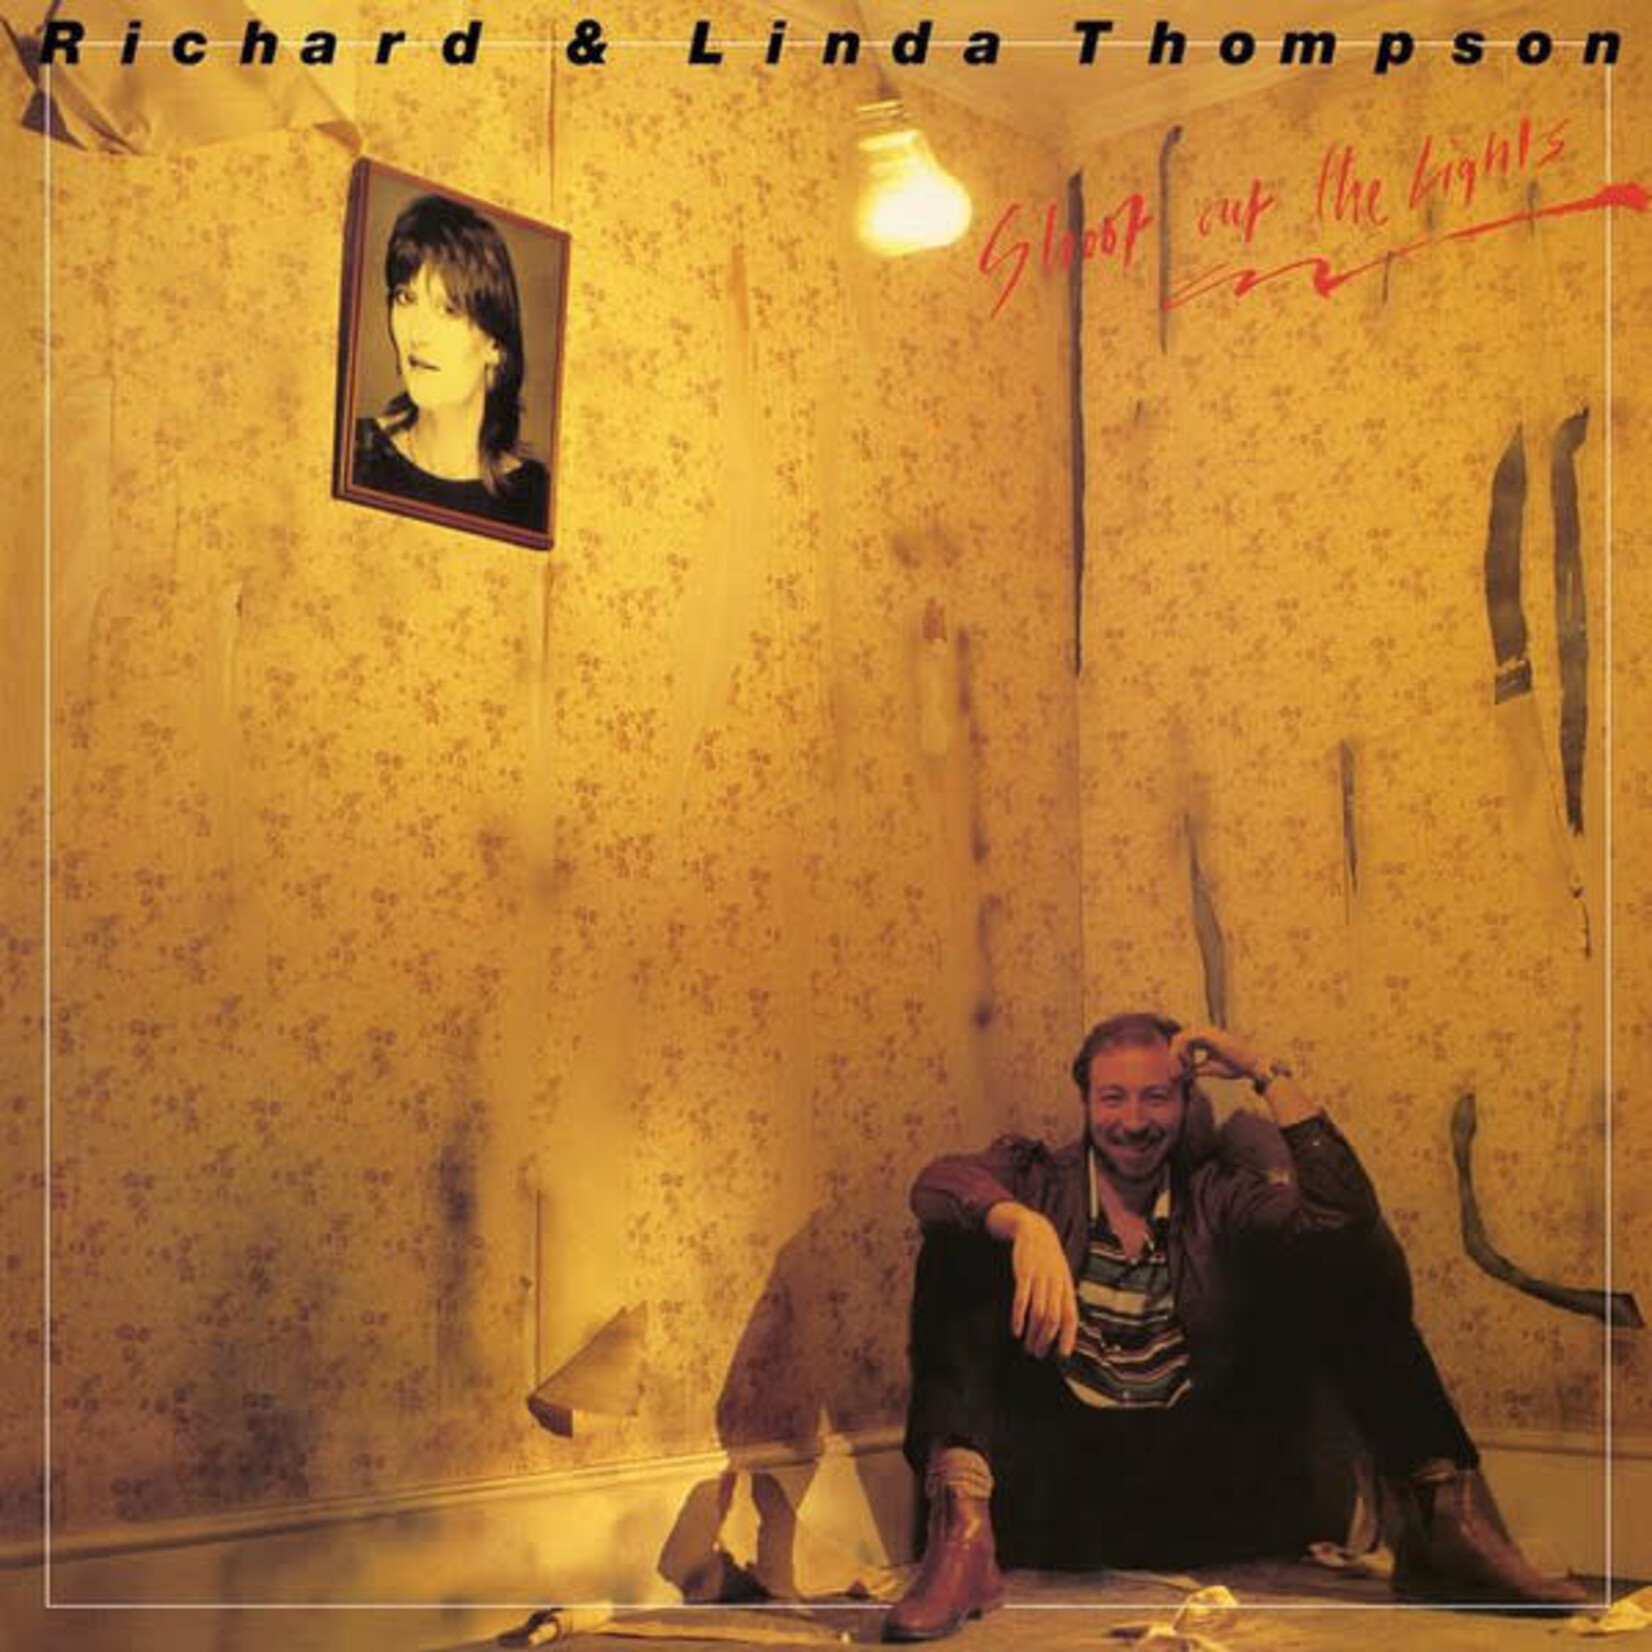 [New] Thompson, Richard & Linda: Shoot Out the Lights [RHINO]